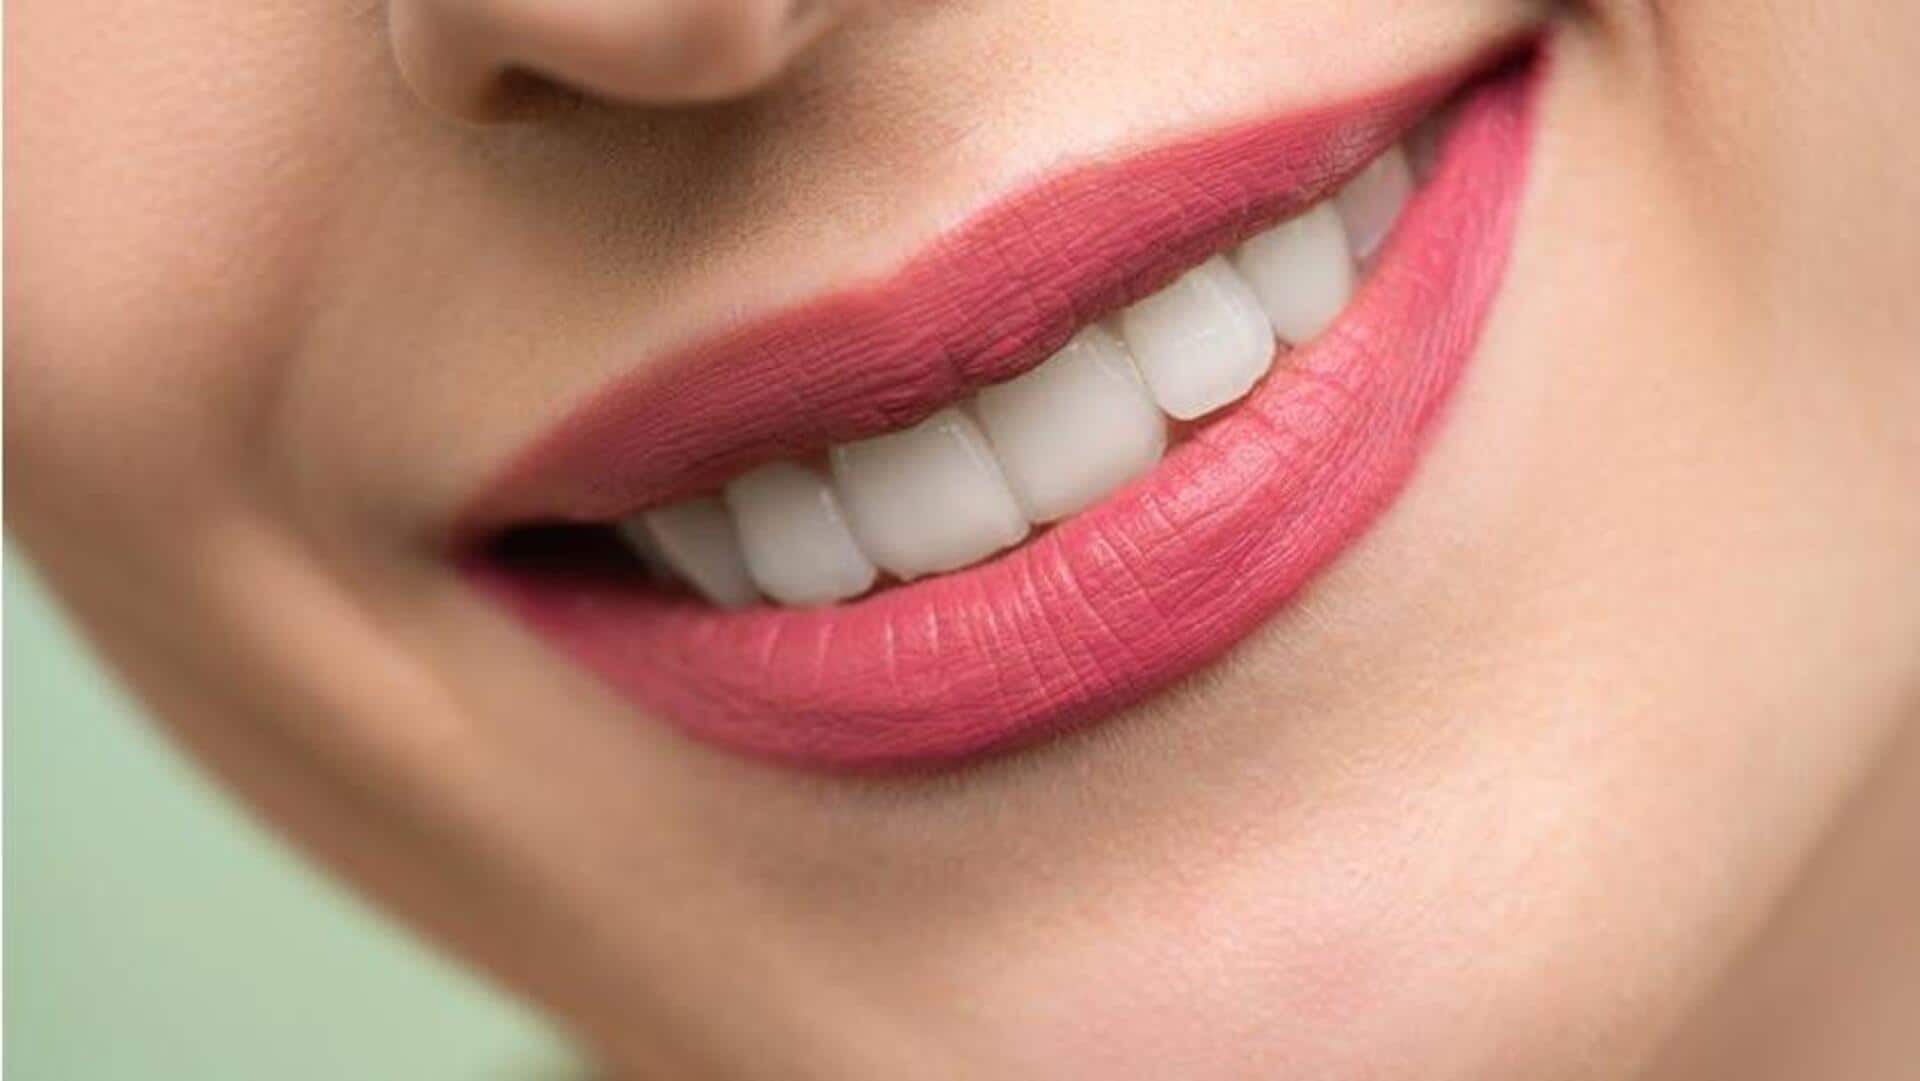 Nourishing your smile: Dental health through food choices